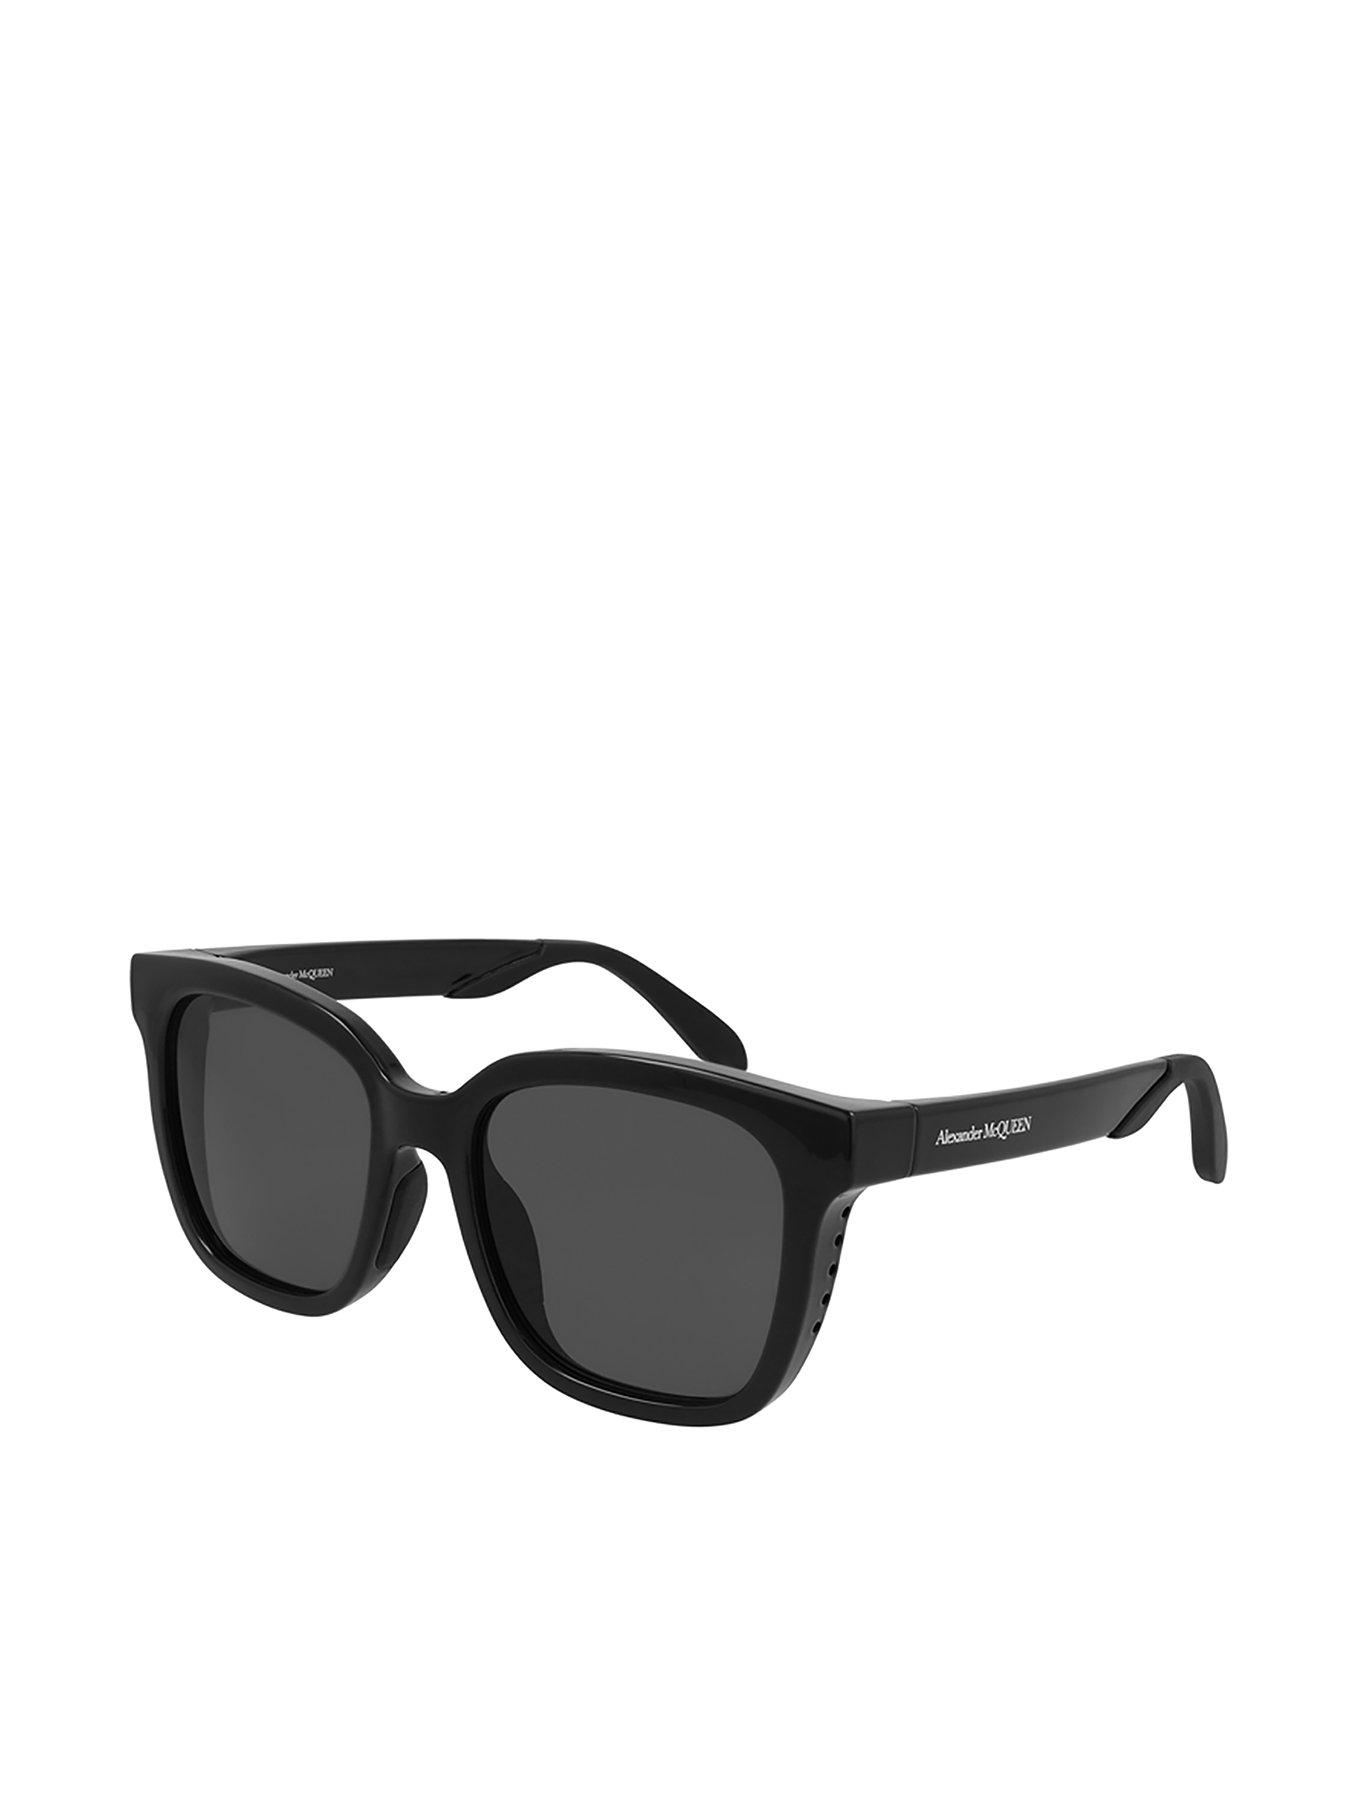 Women Square Sunglasses - Black/Grey